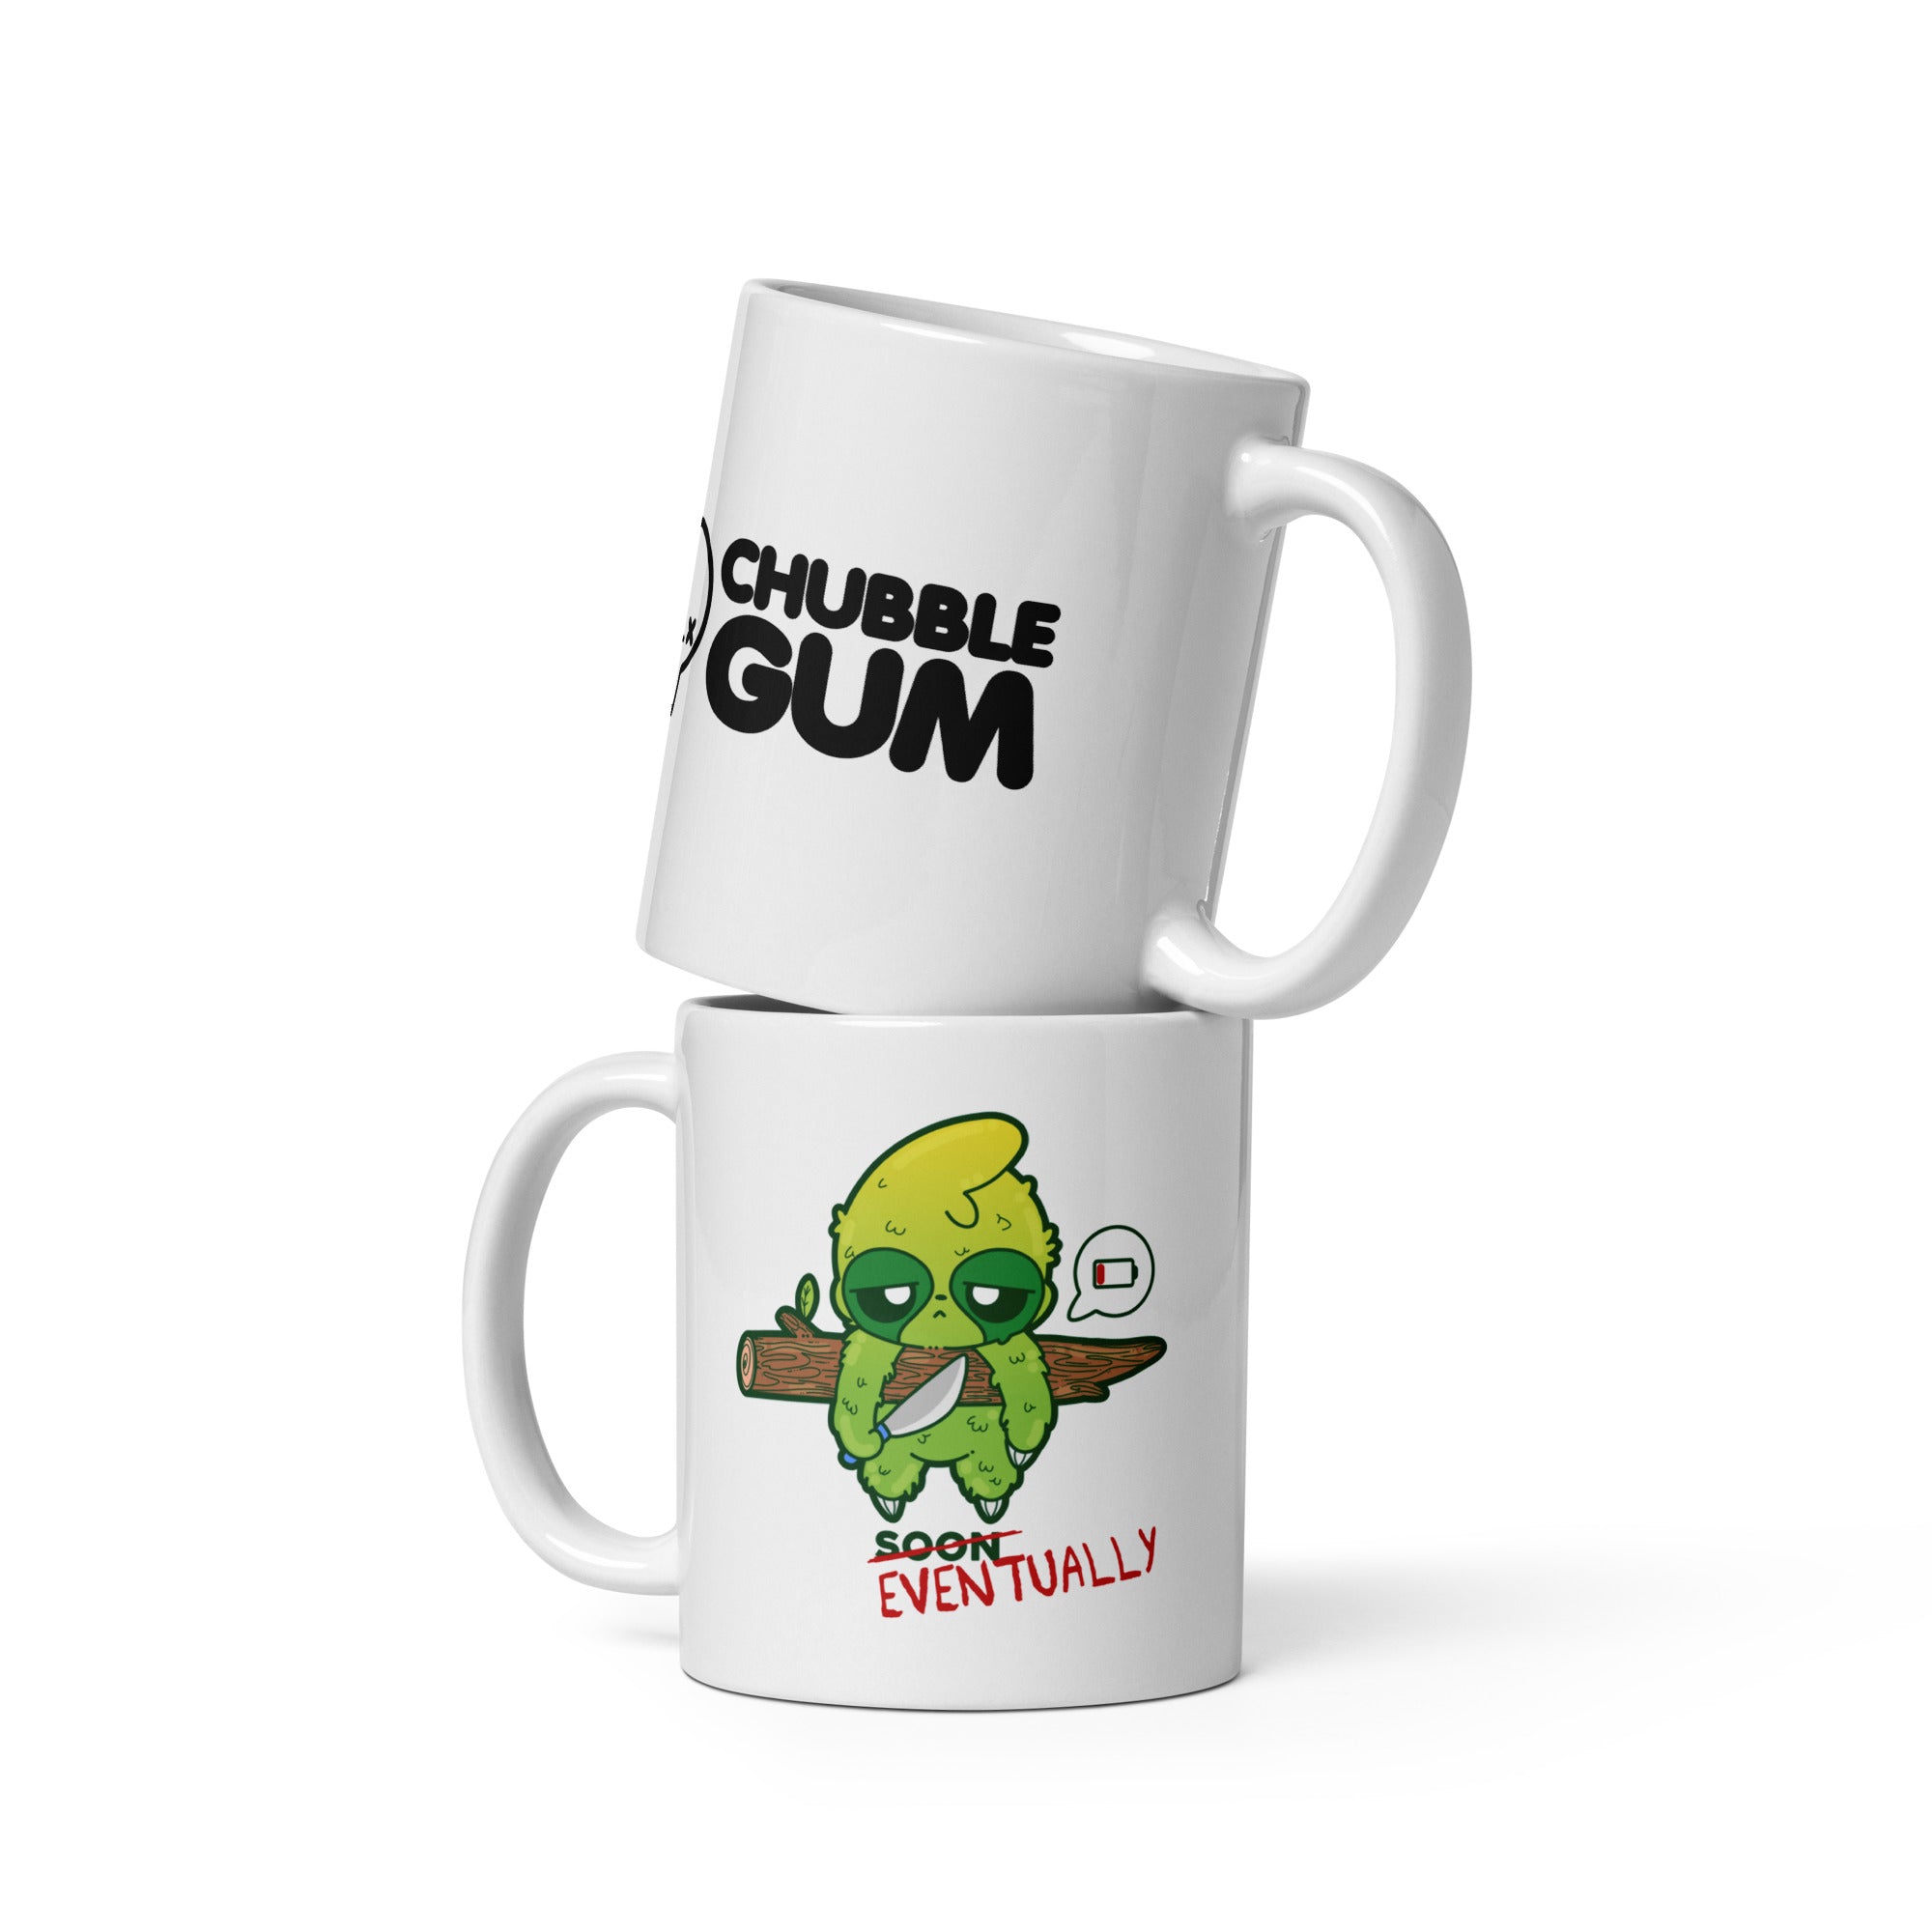 EVENTUALLY - Coffee Mug - ChubbleGumLLC